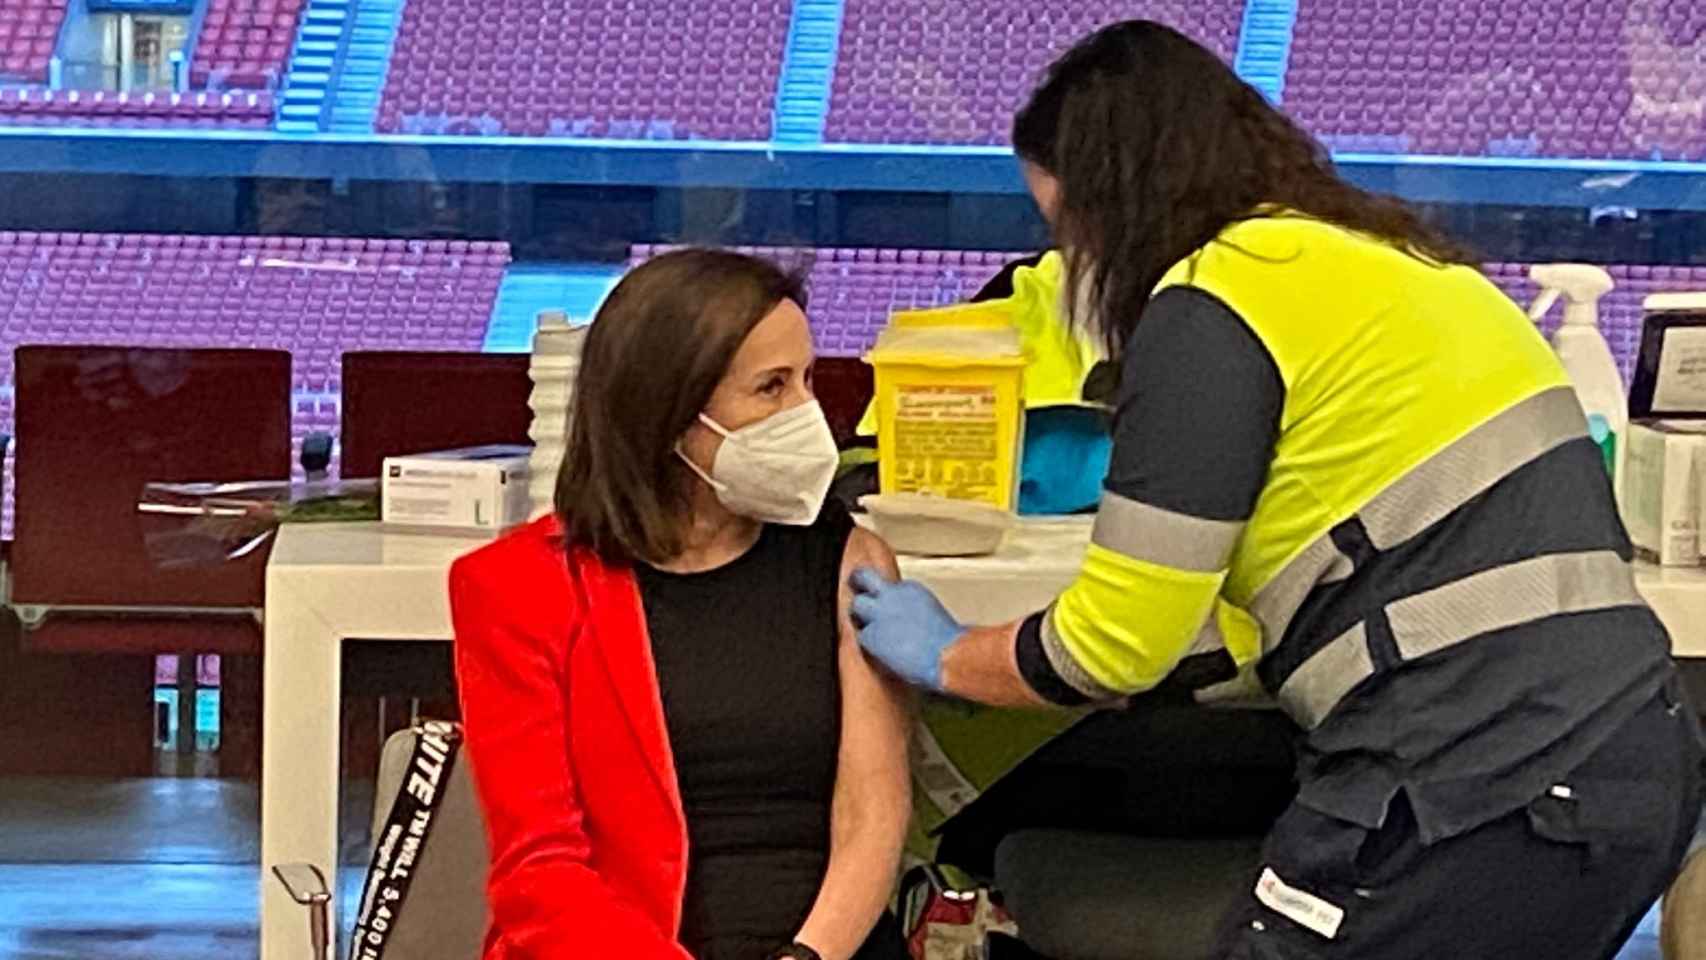 La ministra de Defensa recibe la vacuna de AstraZeneca en el Wanda Metropolitano.